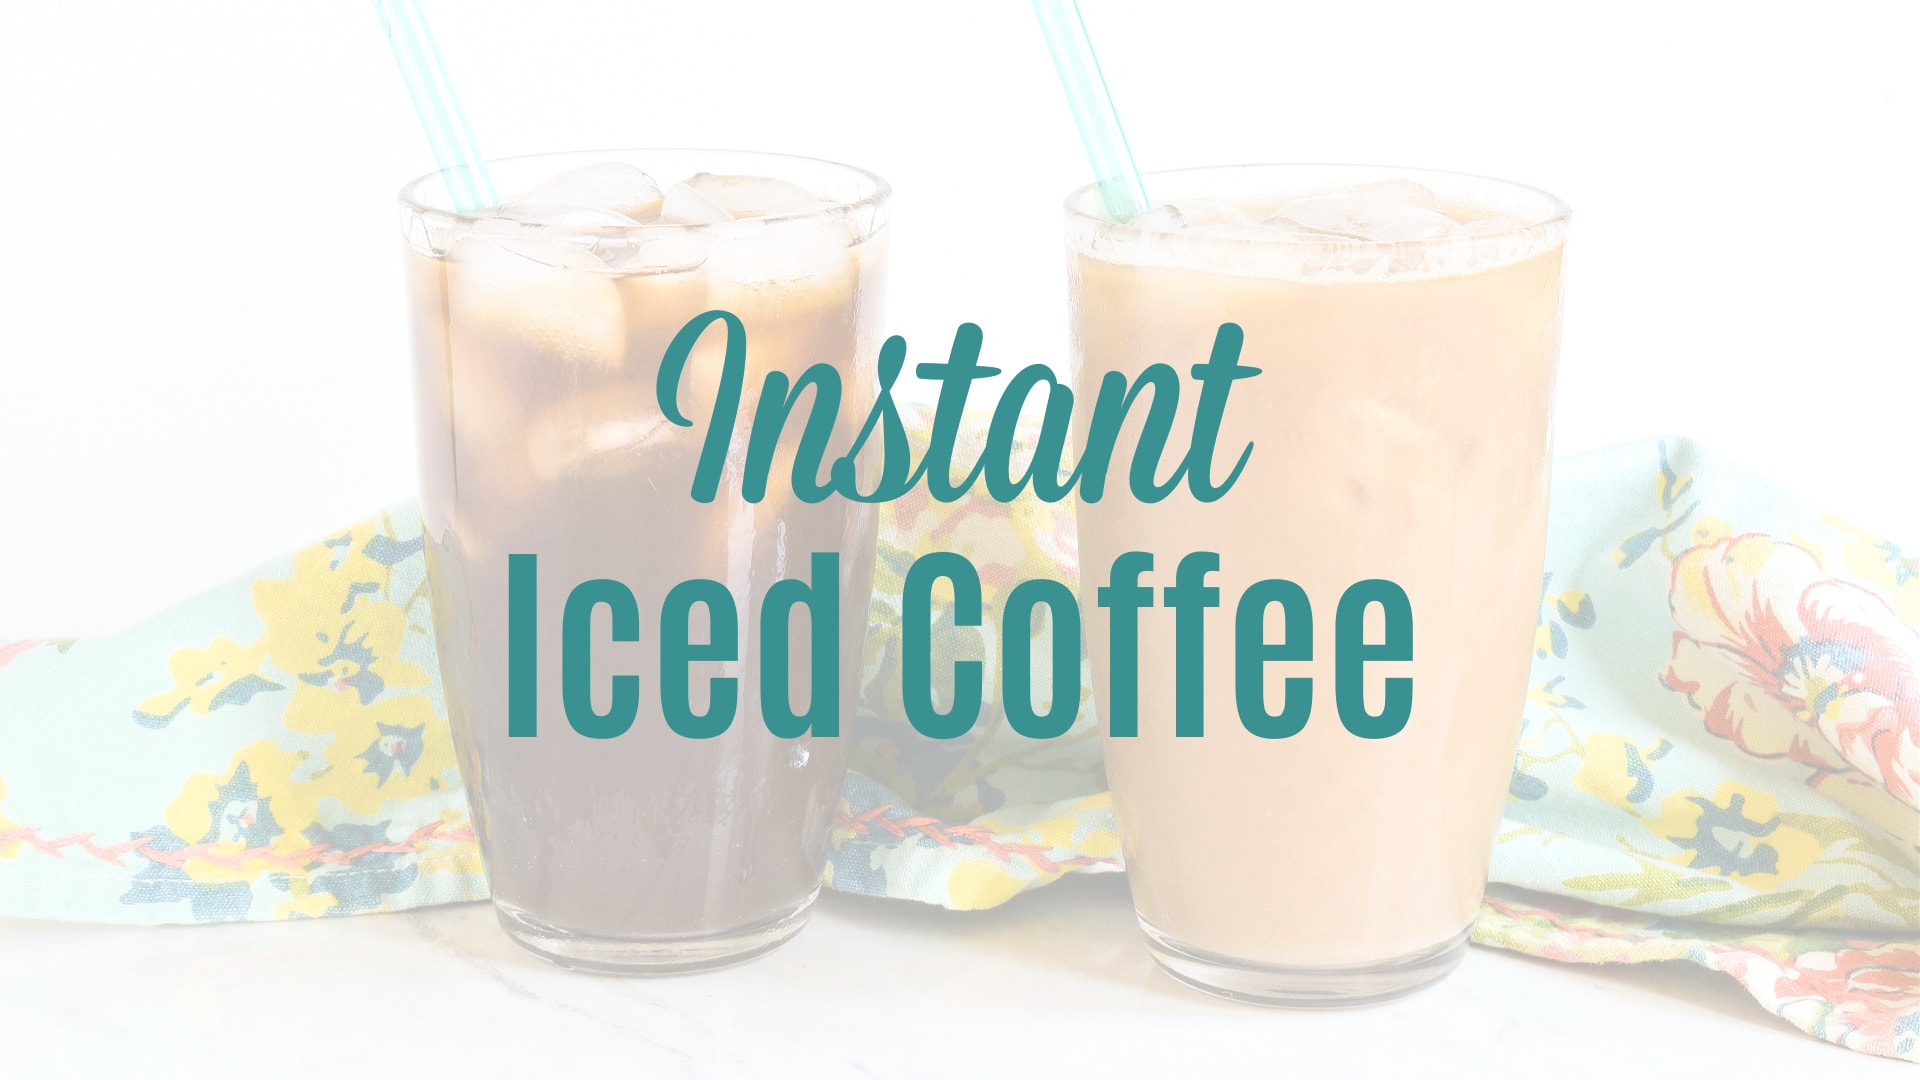 NESCAFÉ ICE/INSTANT ICED COFFEE/CAFÉ SOLUBLE PARA PREPARAR FRIO/170G Iced  lattes